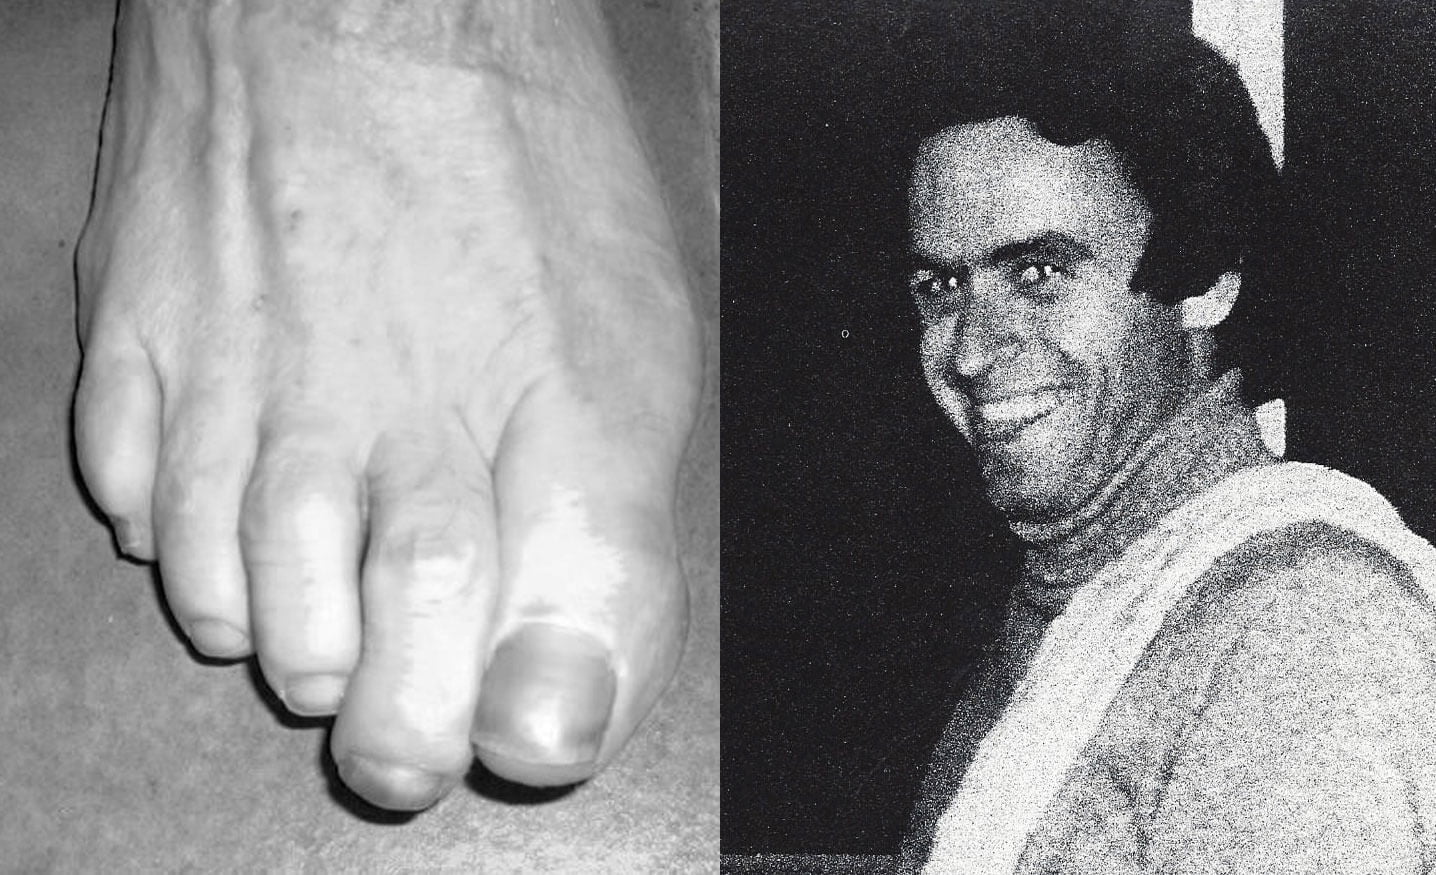 Ted Bundy's Feet